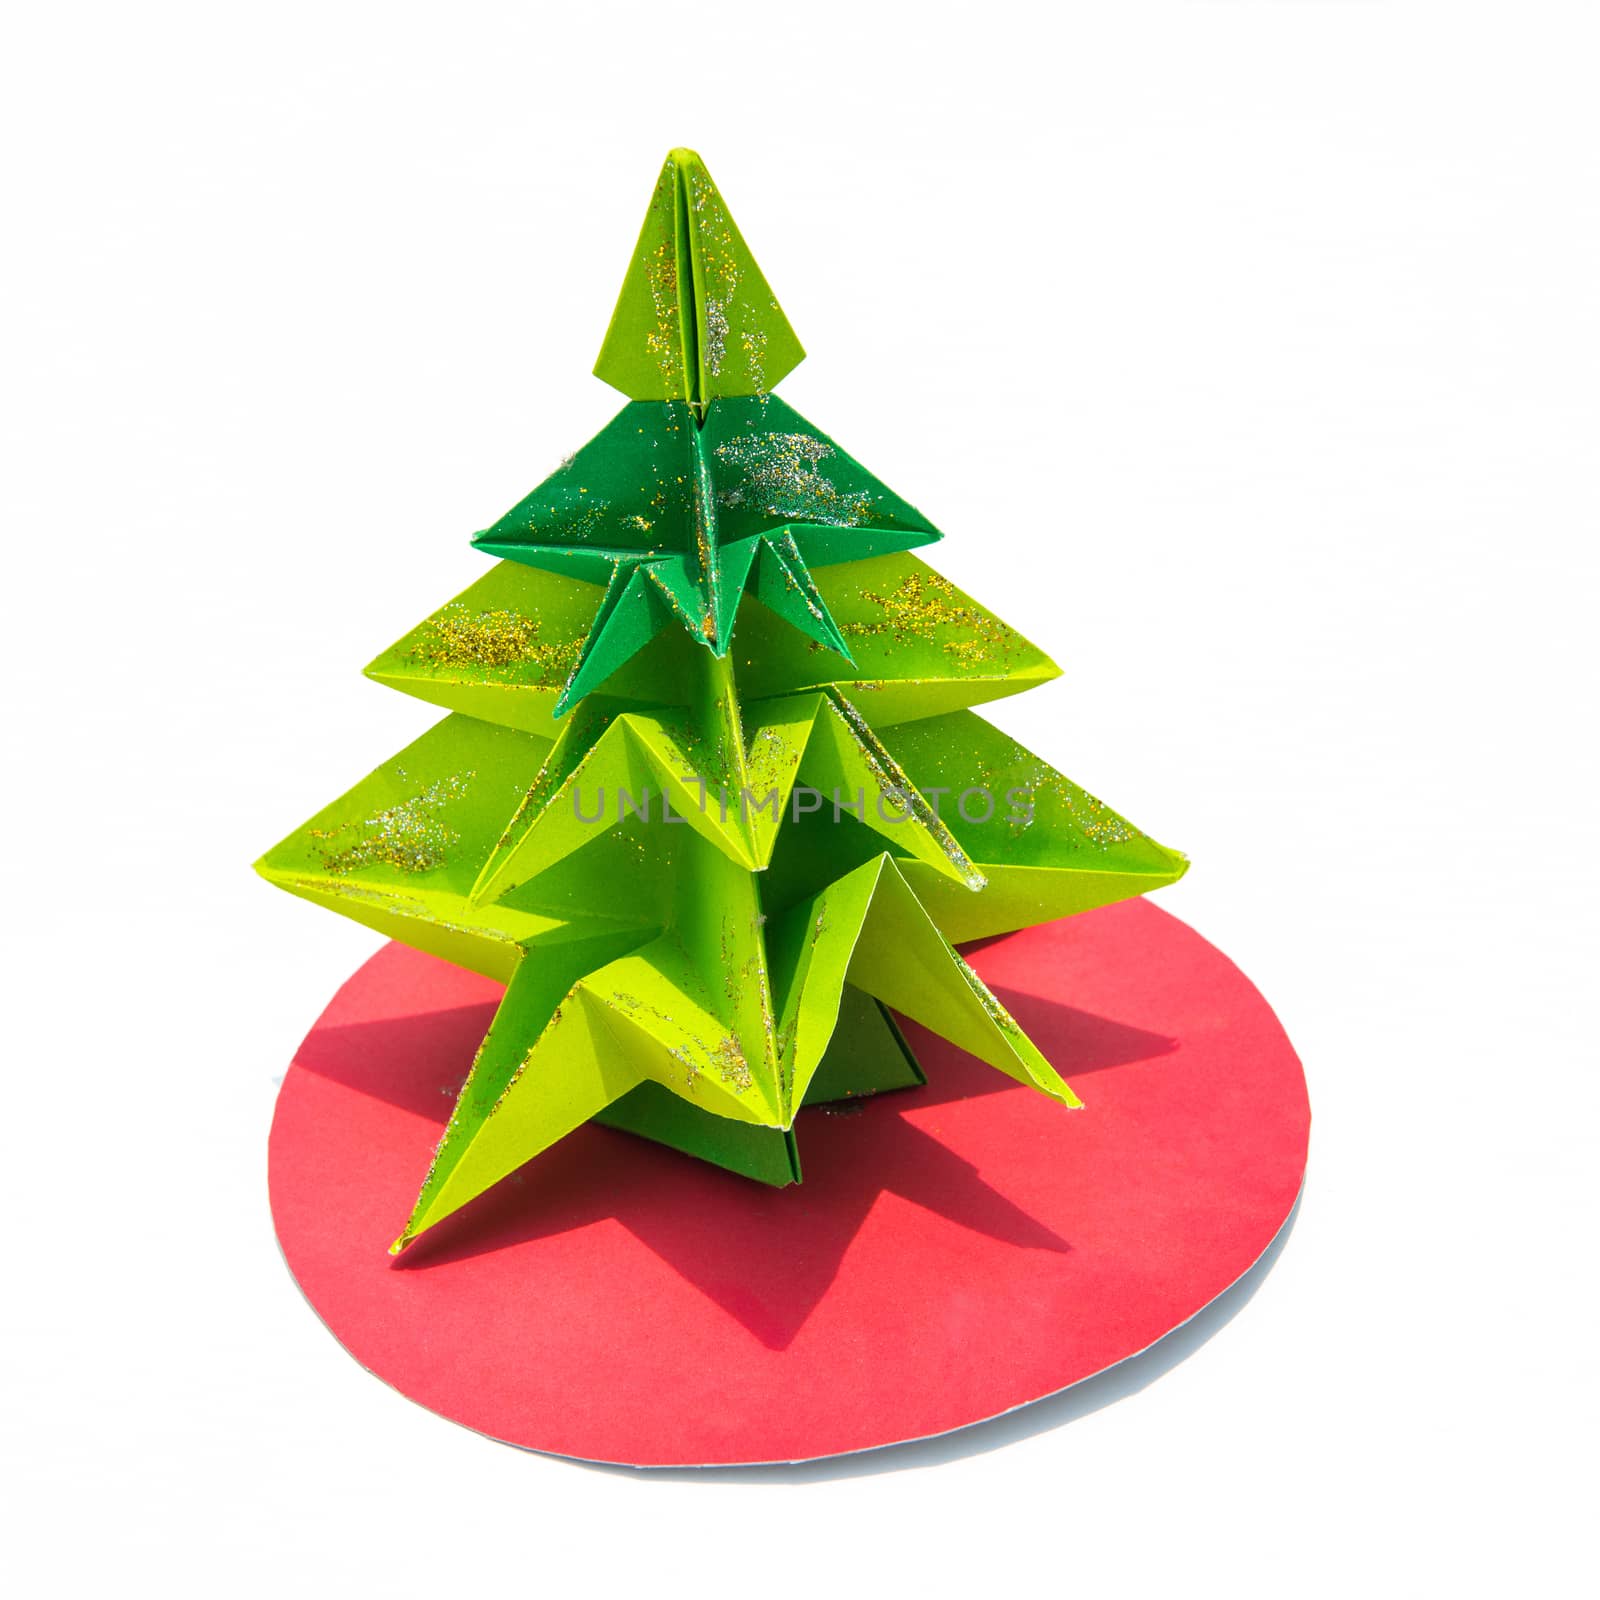 Green origami christmas tree by opasstudio